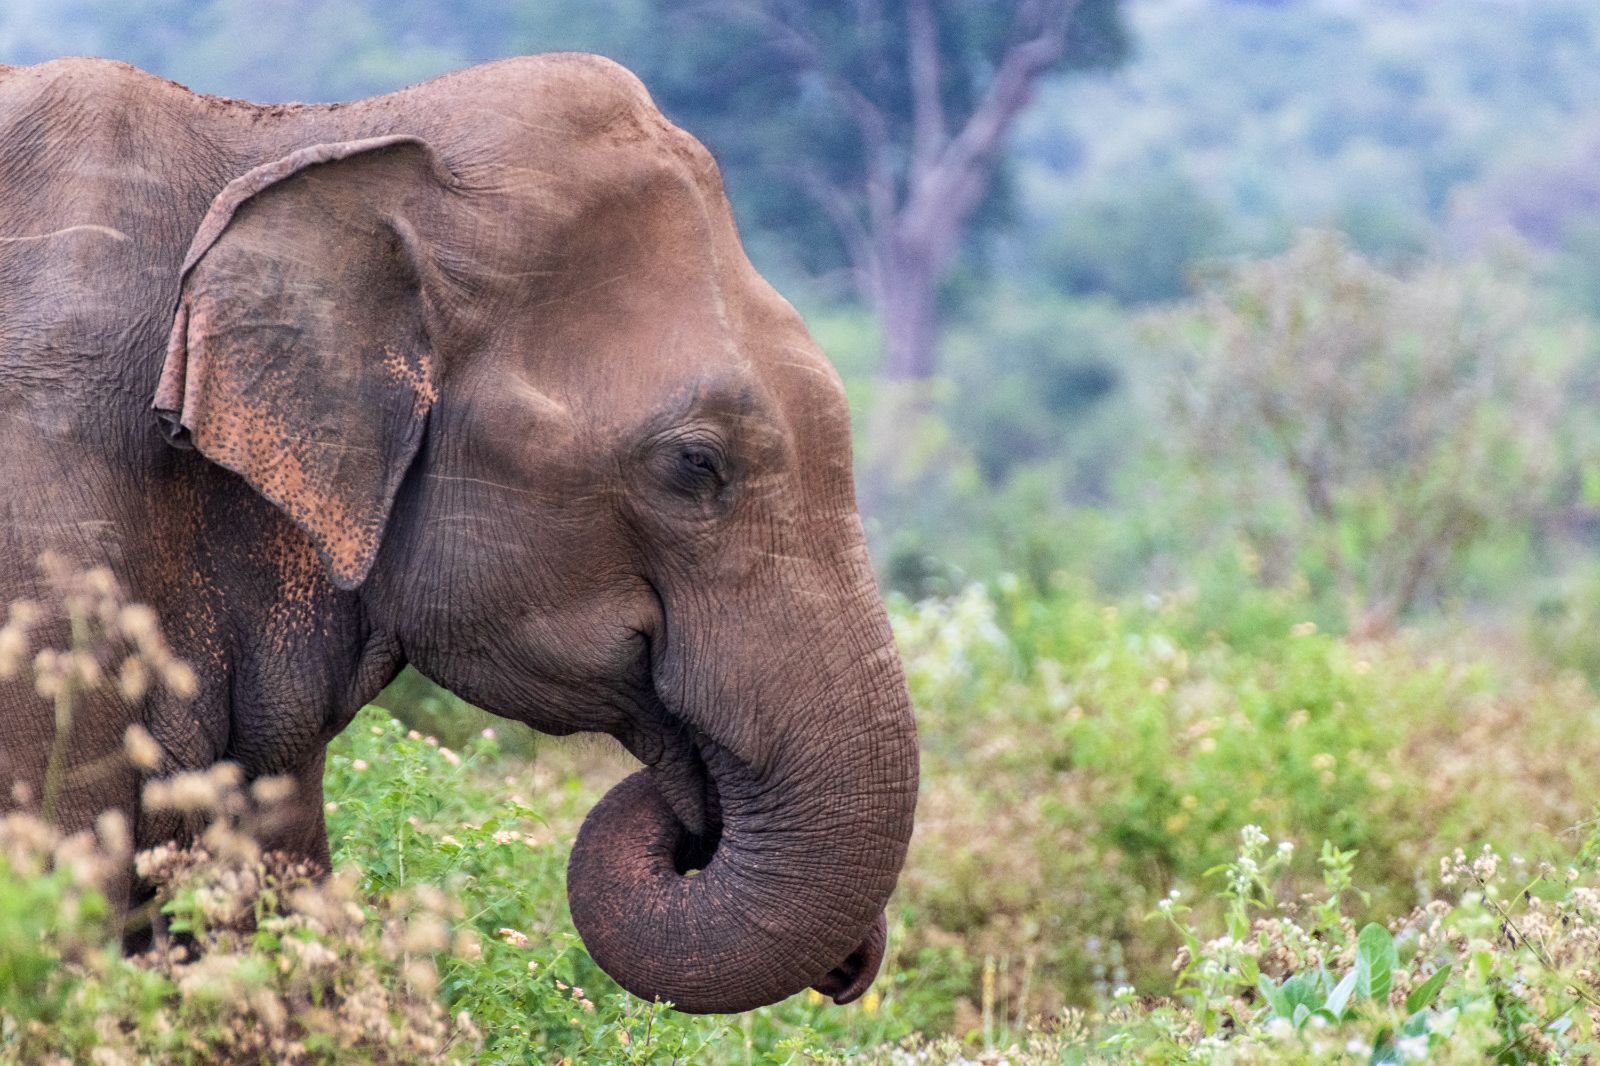 Profile view of an Elephant in Sri Lanka